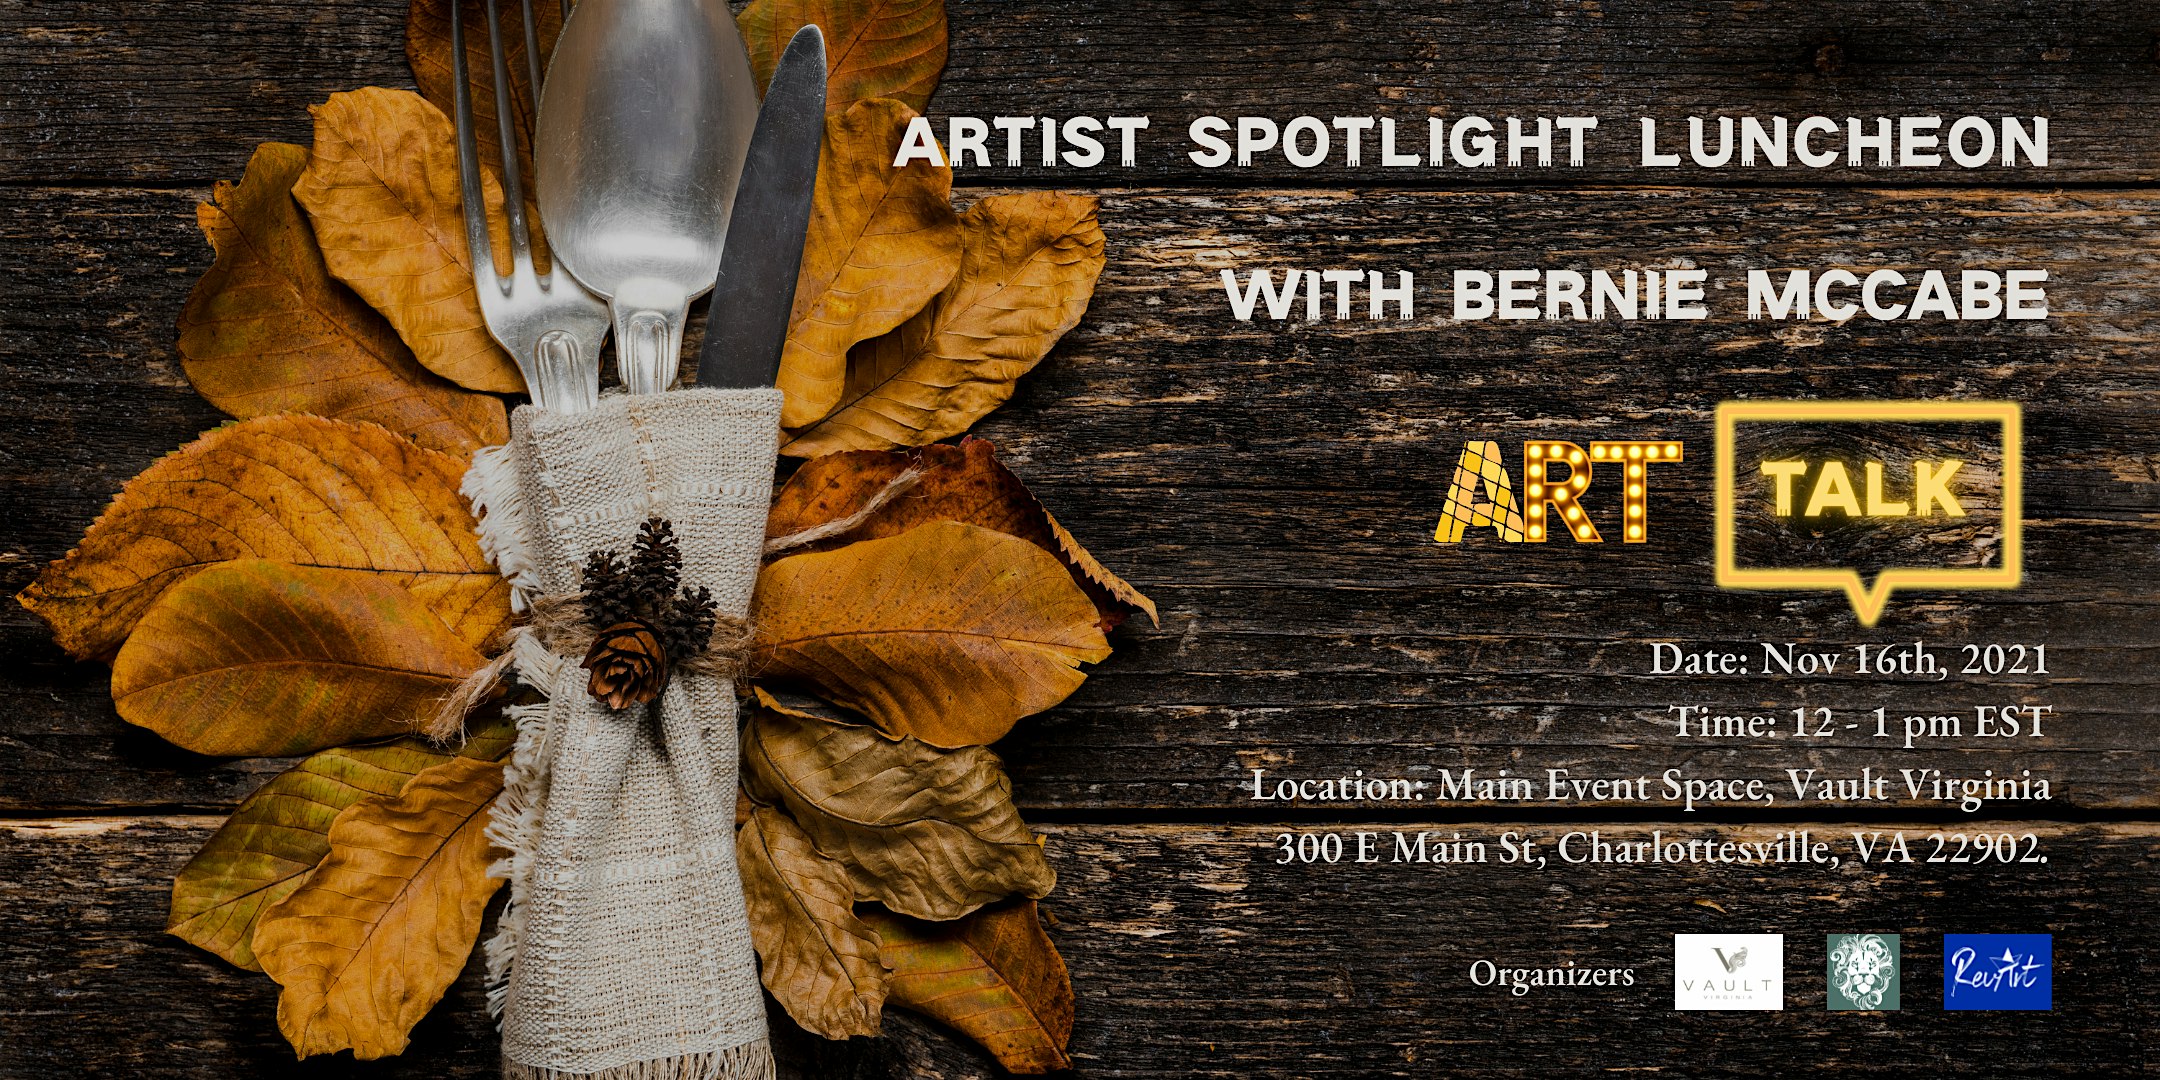 Artist Spotlight Luncheon with Bernie McCabe